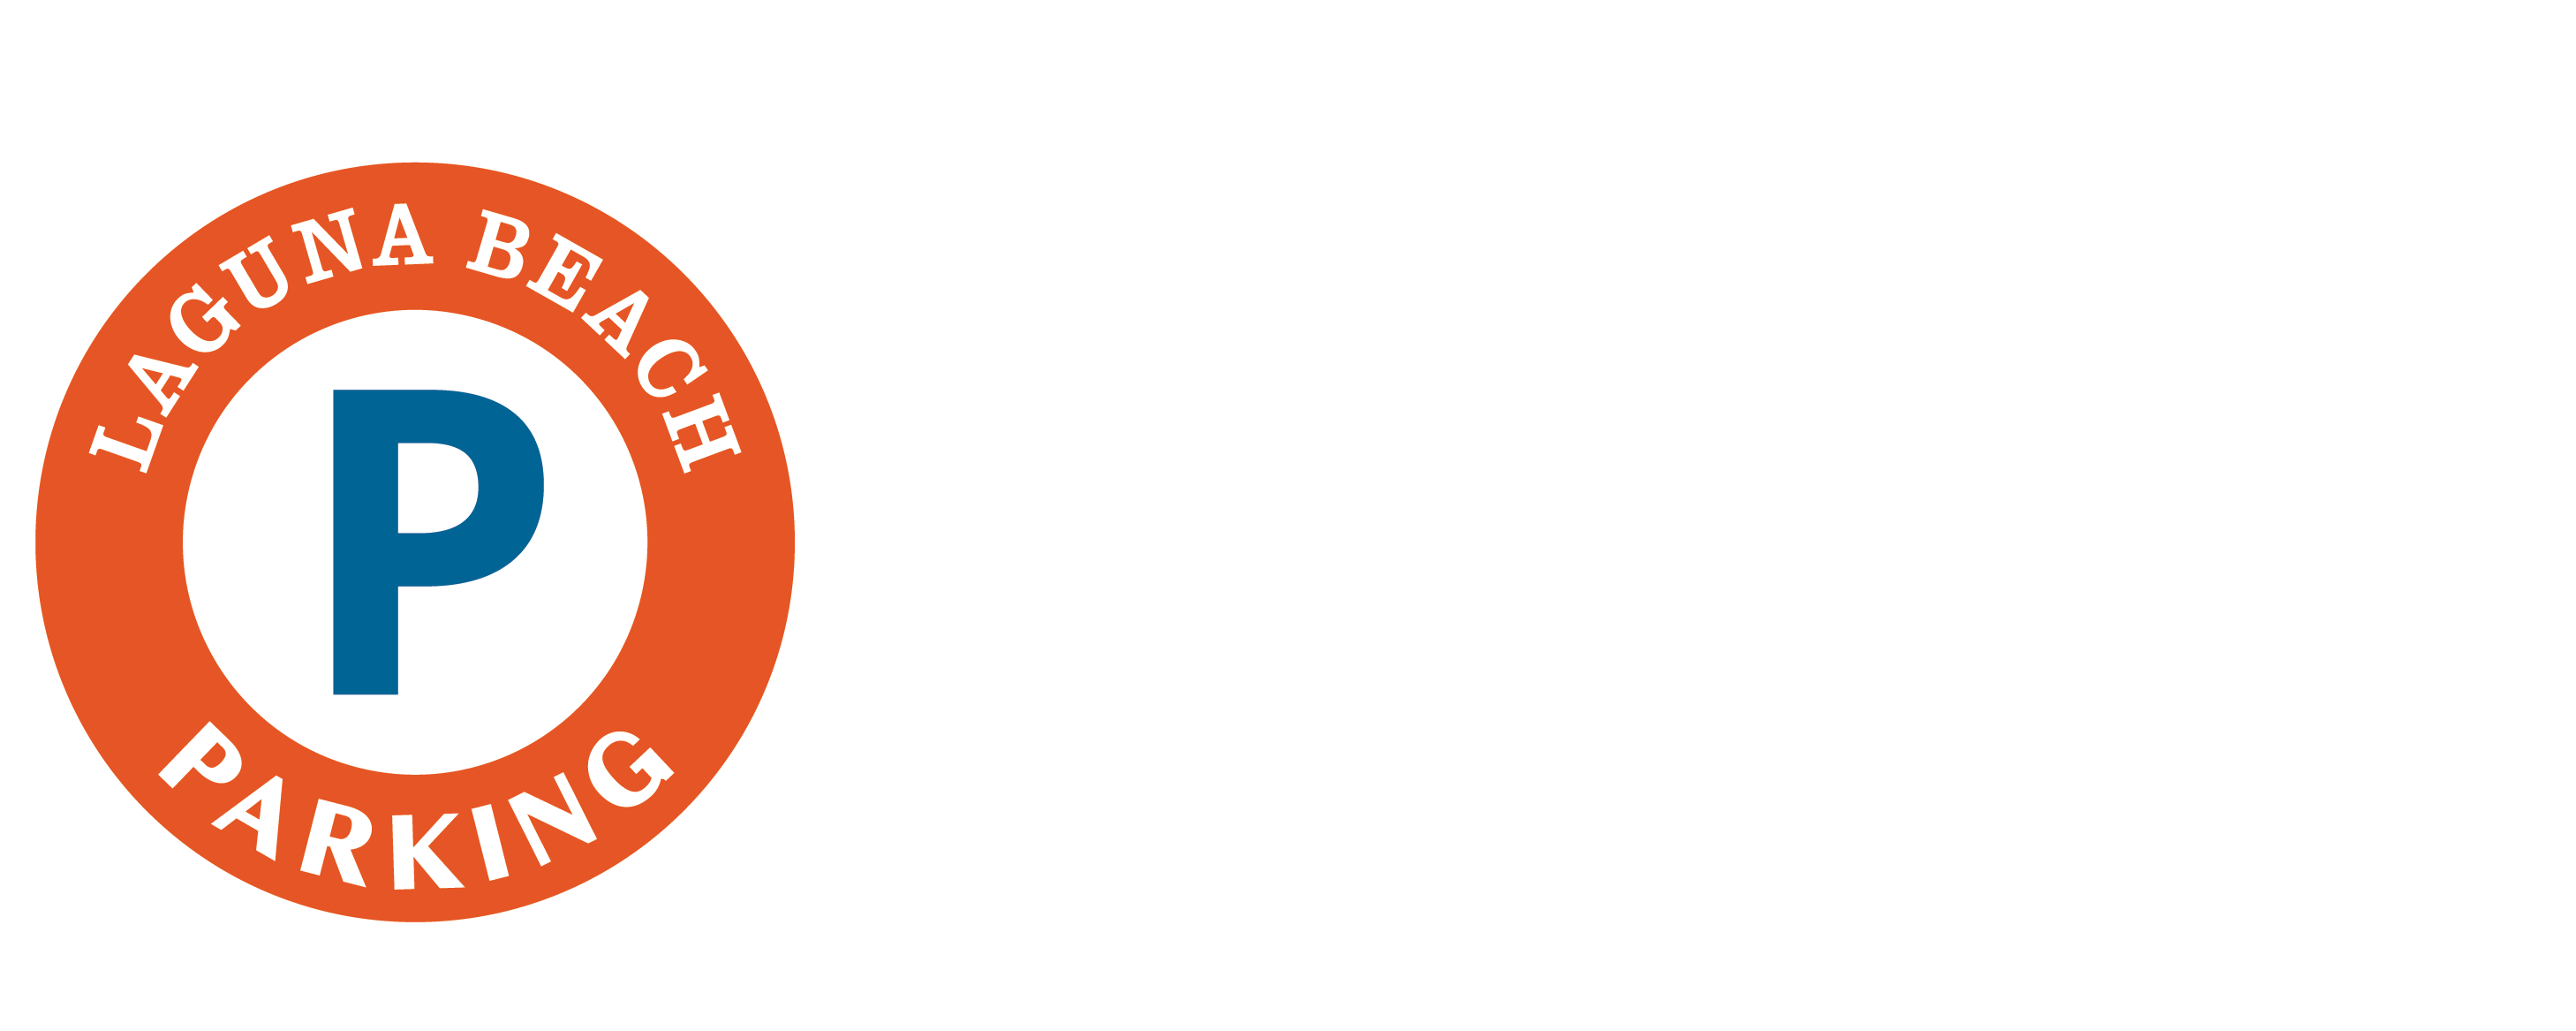 Laguna Beach | Parking System | Parking Solution 